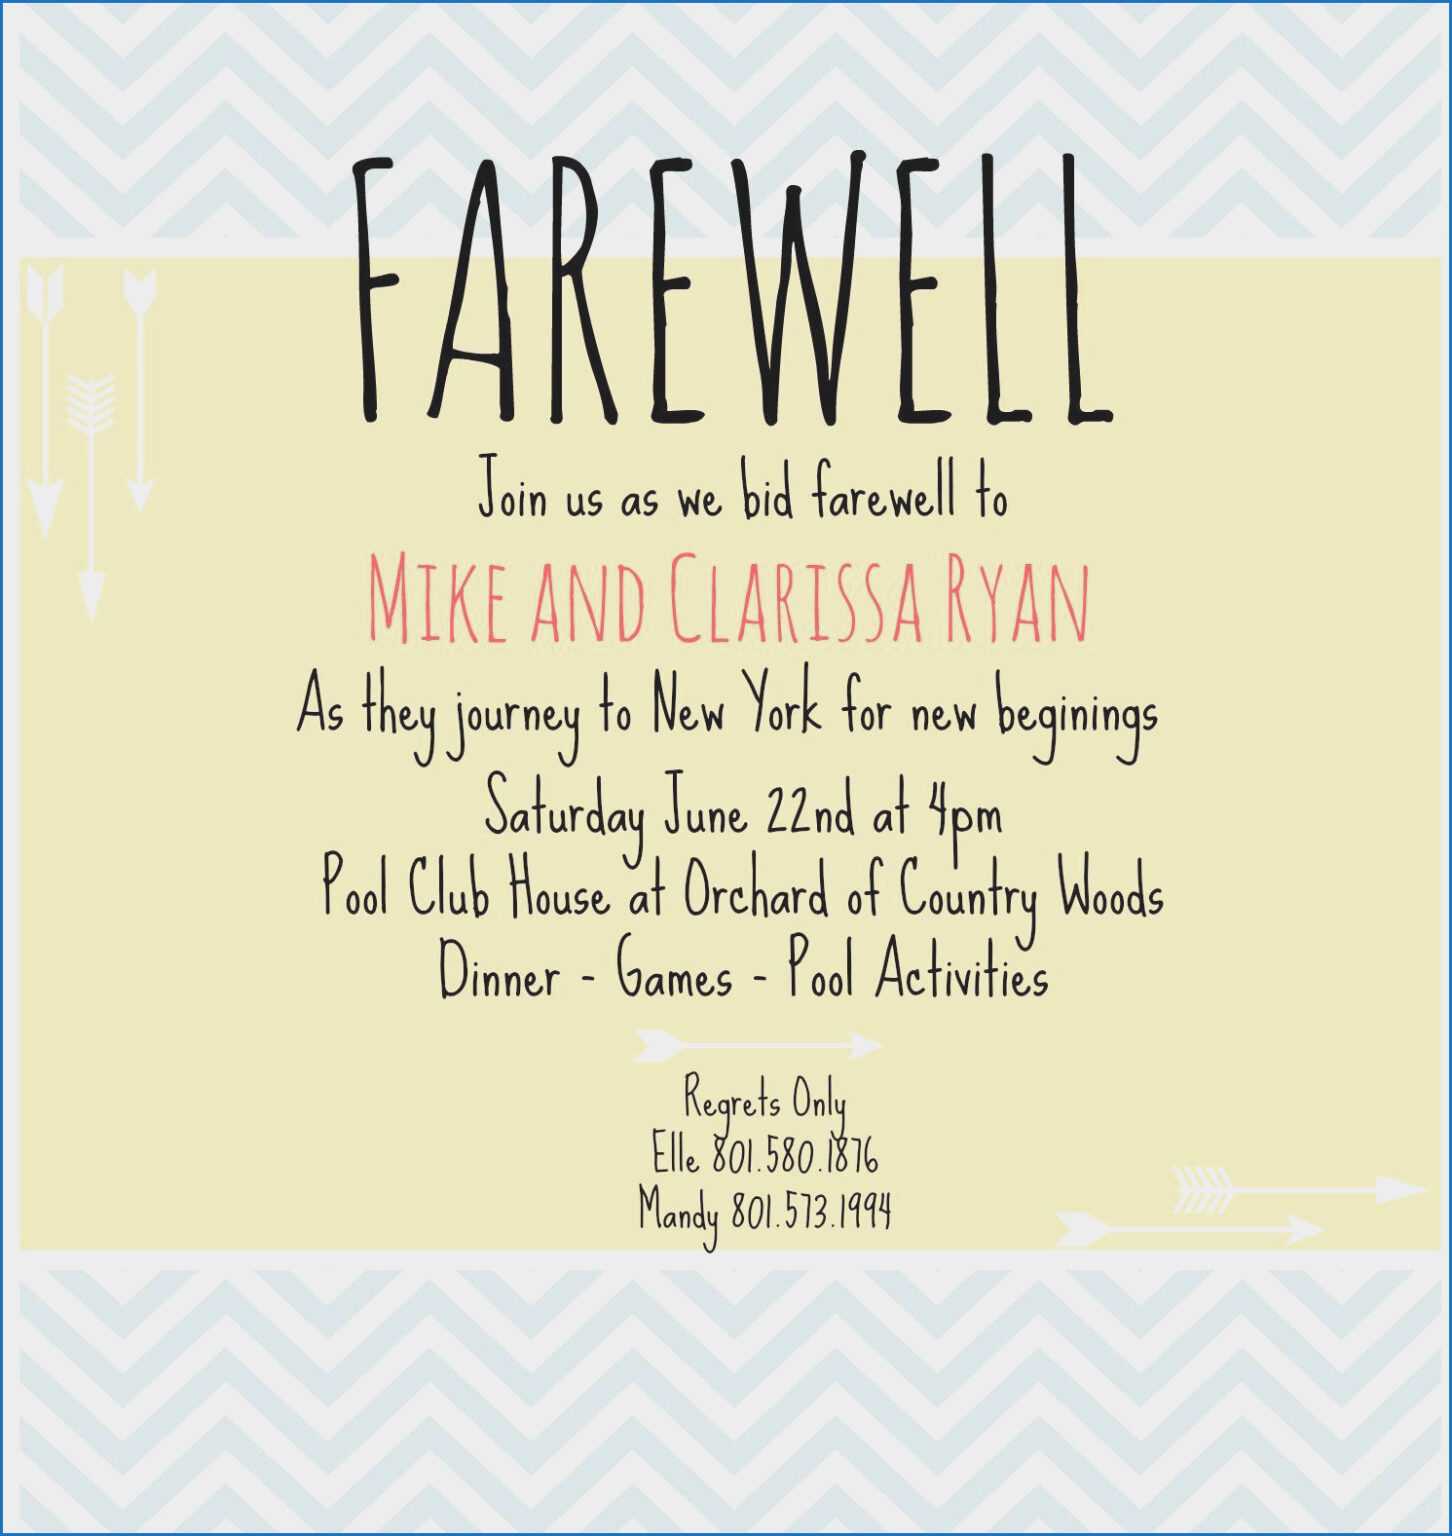 757-free-farewell-invitation-template-word-invitations-regarding